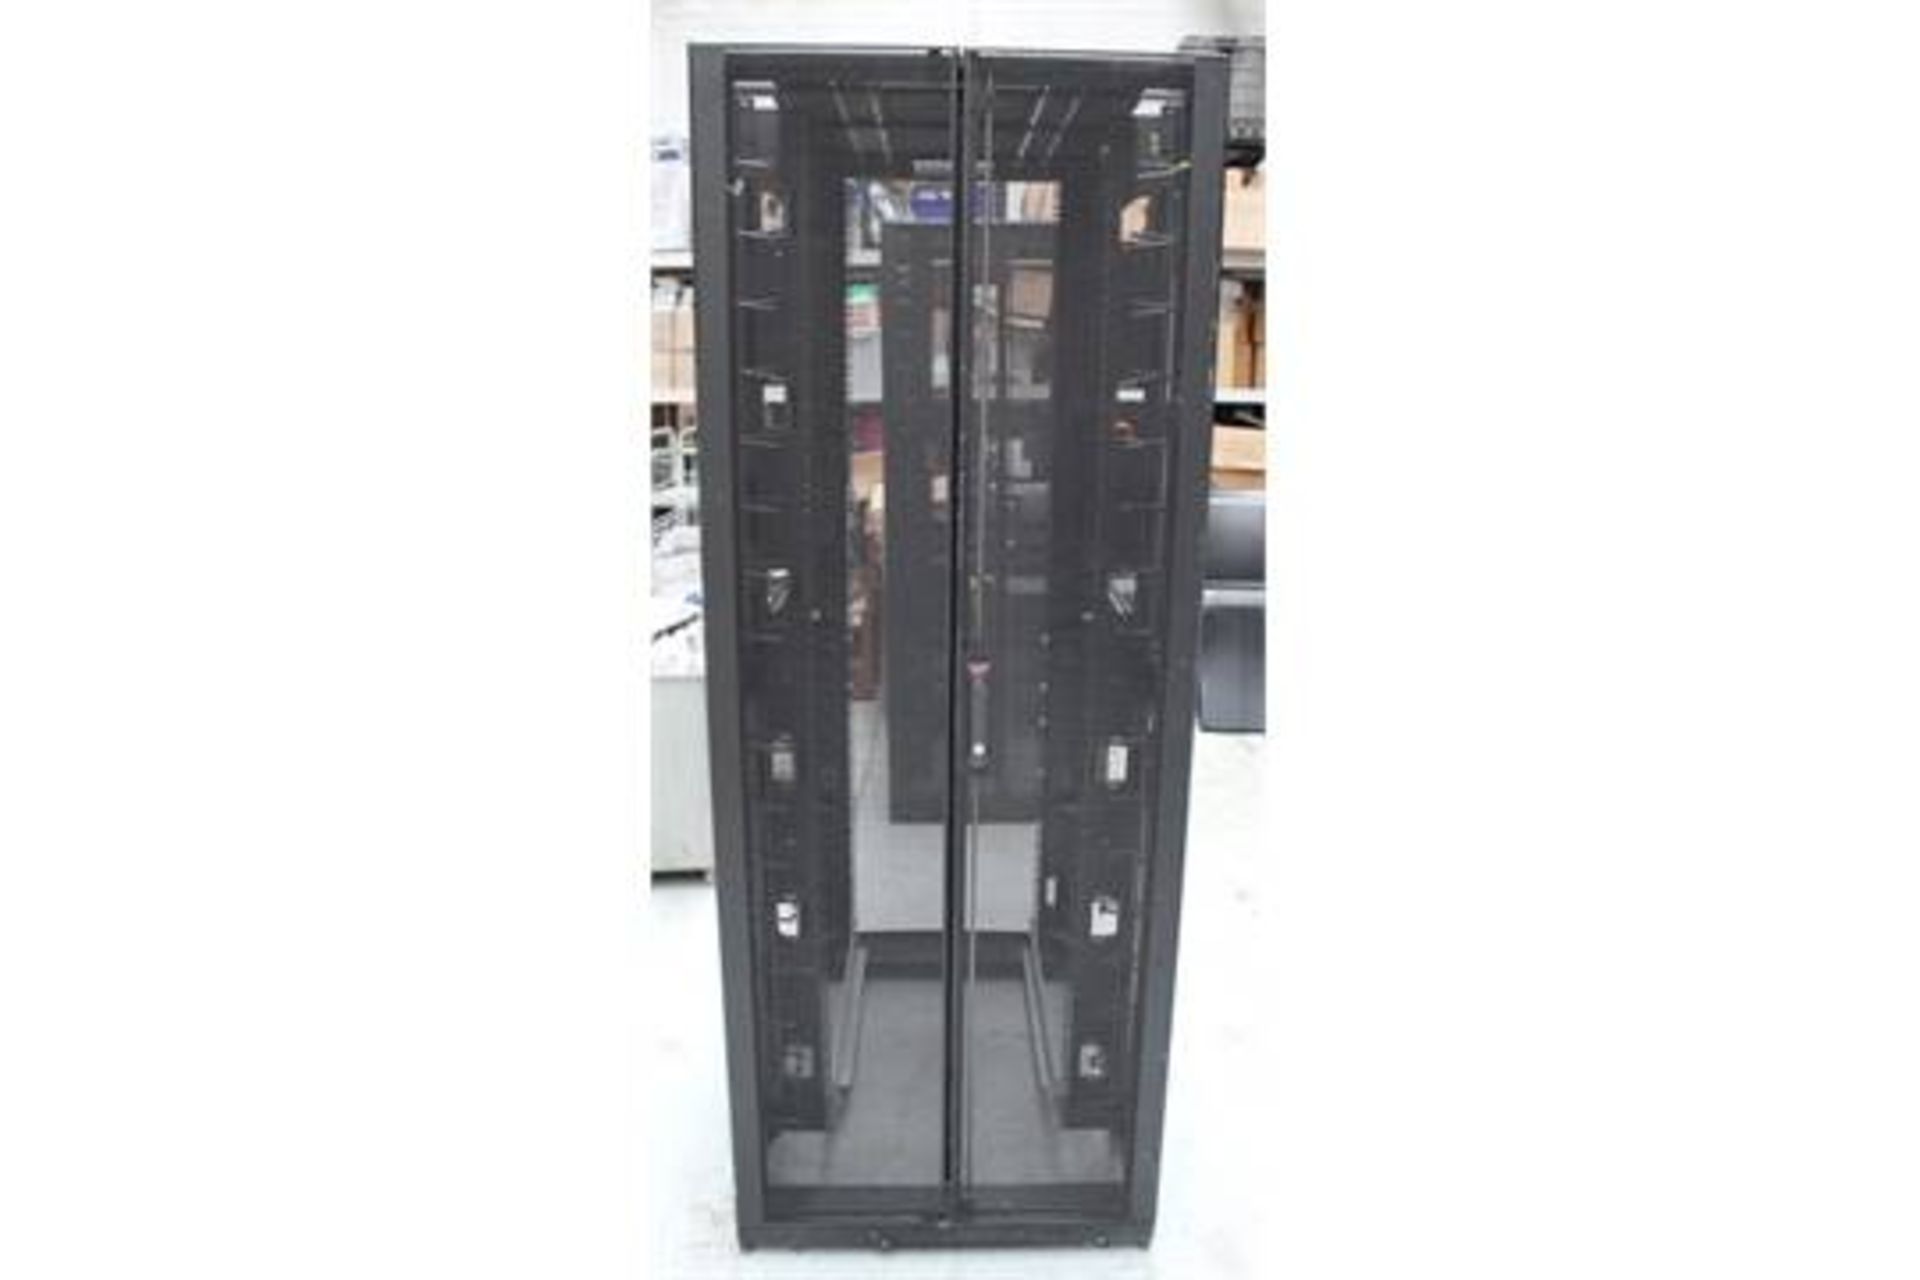 1 x APC Netshelter 42U Server Enclosure - AR3100 Black - Suitable For 19 Inch Compliant Equipment - - Image 4 of 4